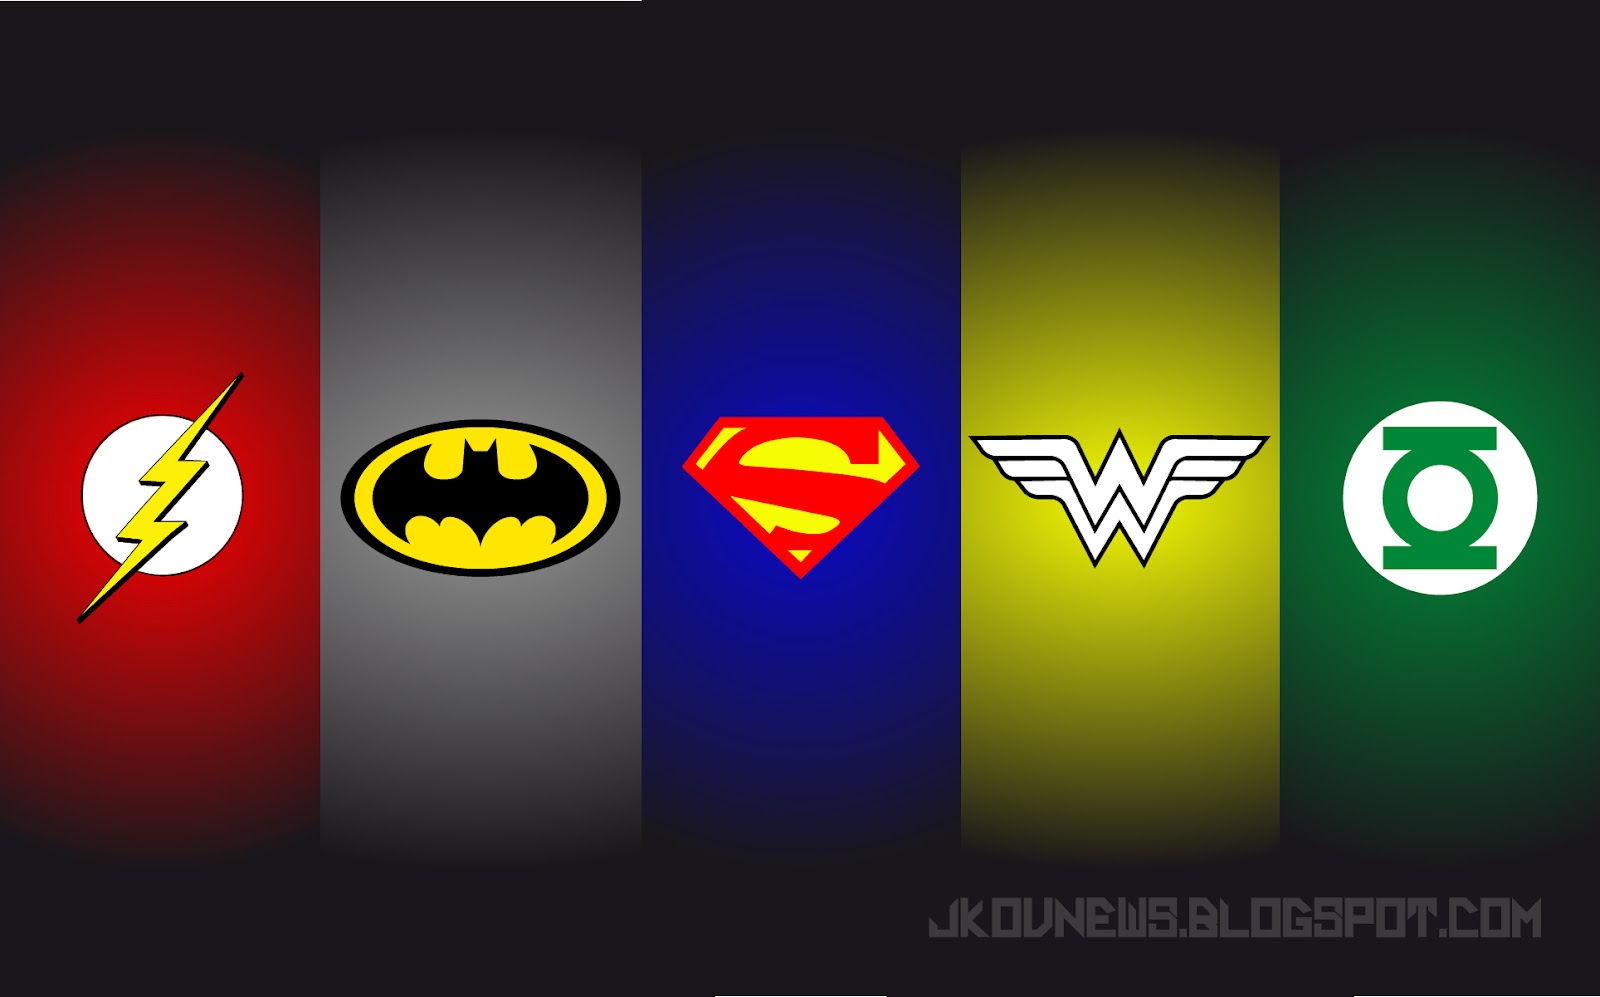 JkovNews Justice League wallpaper